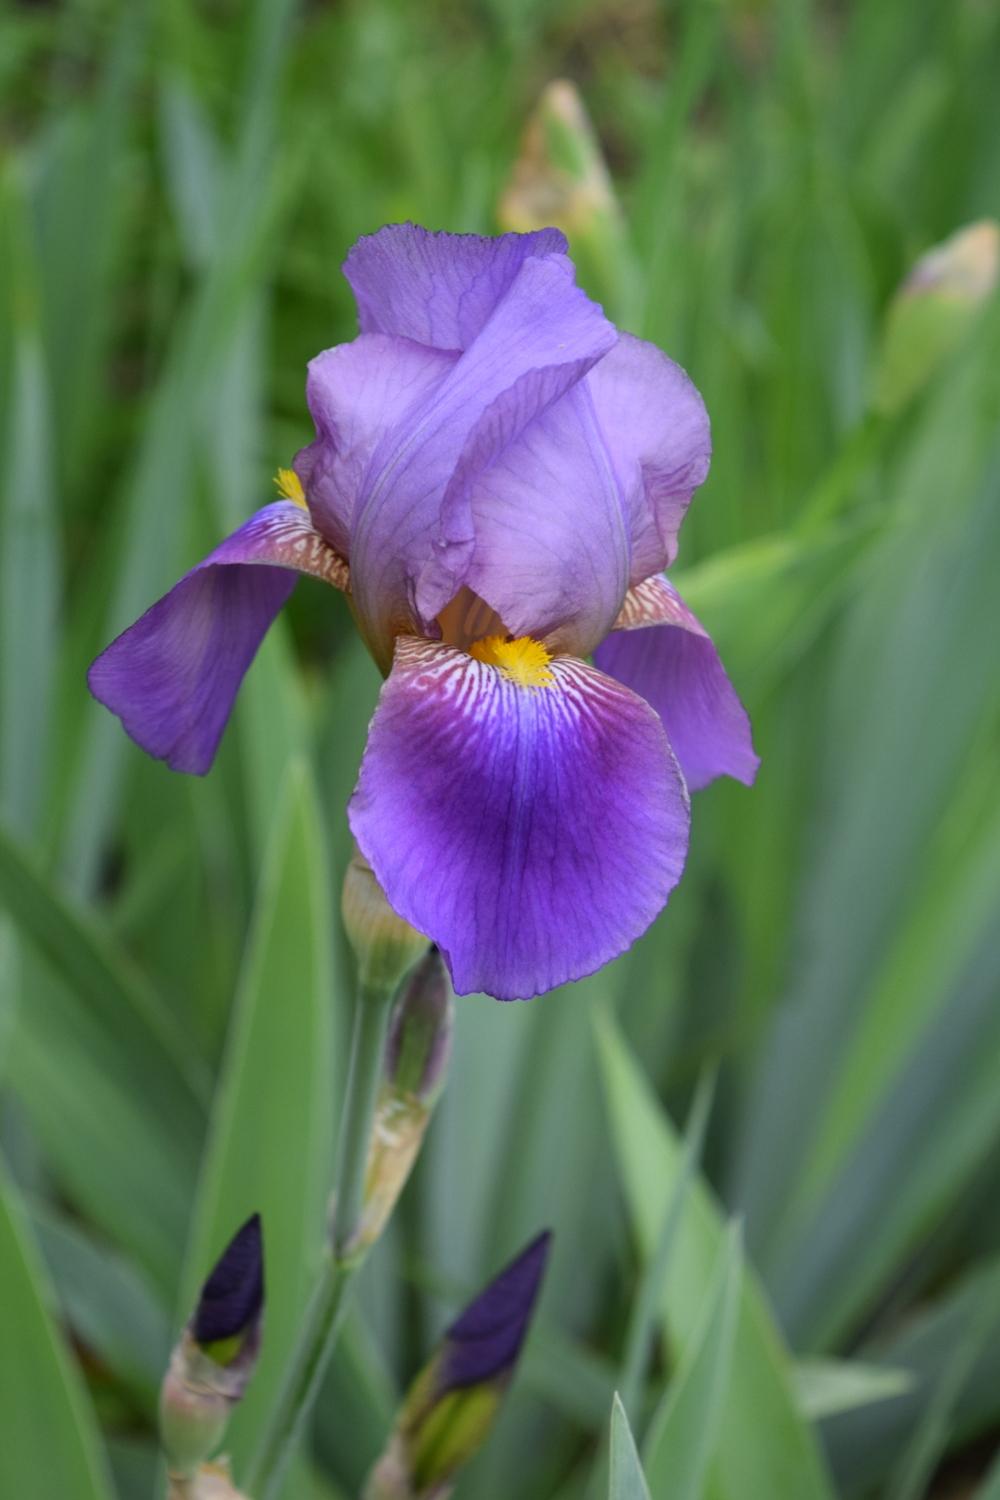 Photo of Tall Bearded Iris (Iris 'Lent A. Williamson') uploaded by Dachsylady86